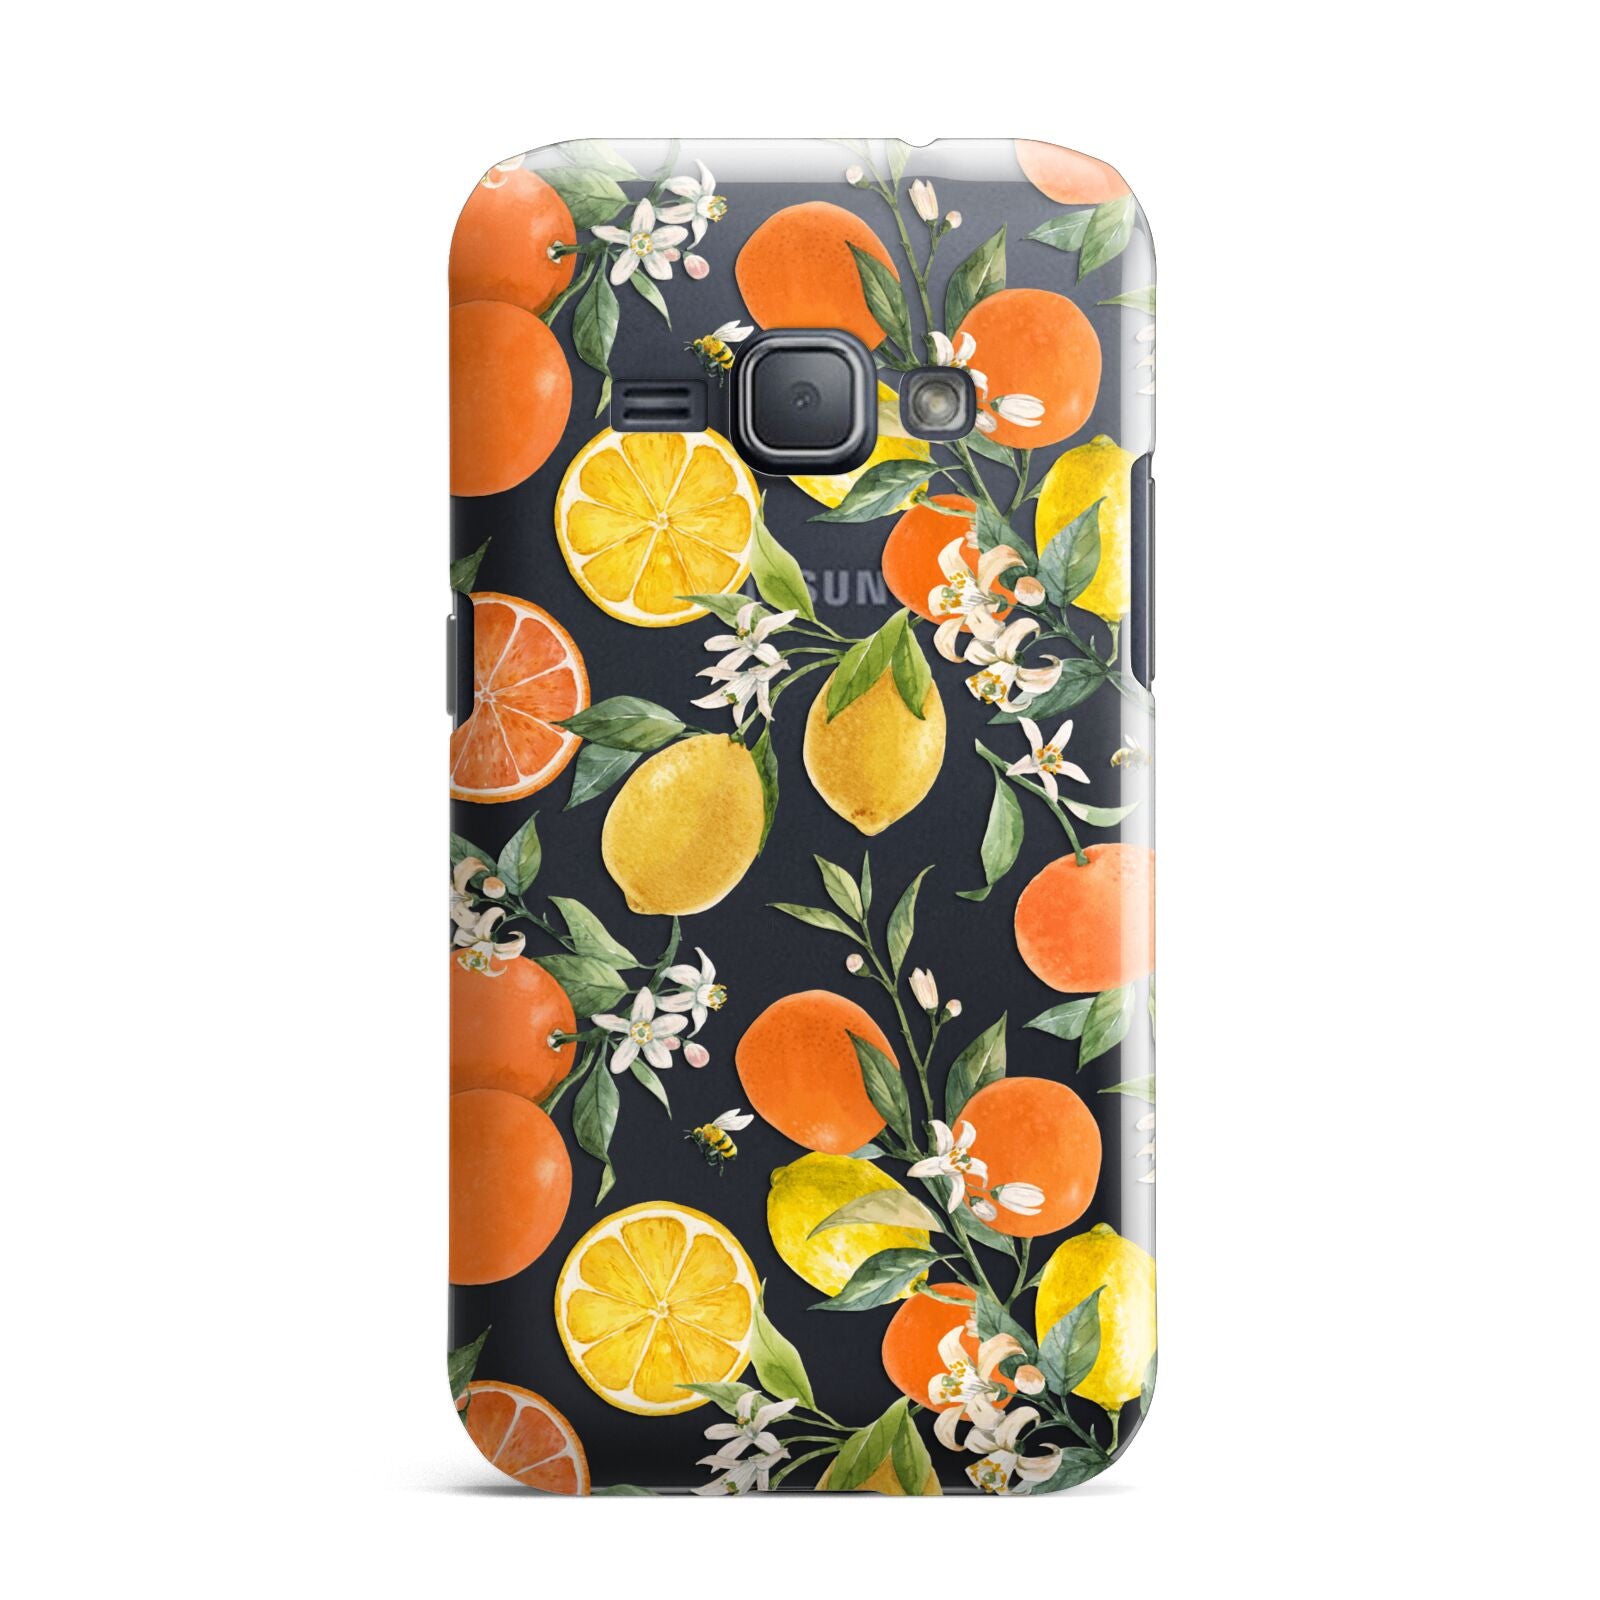 Lemons and Oranges Samsung Galaxy J1 2016 Case